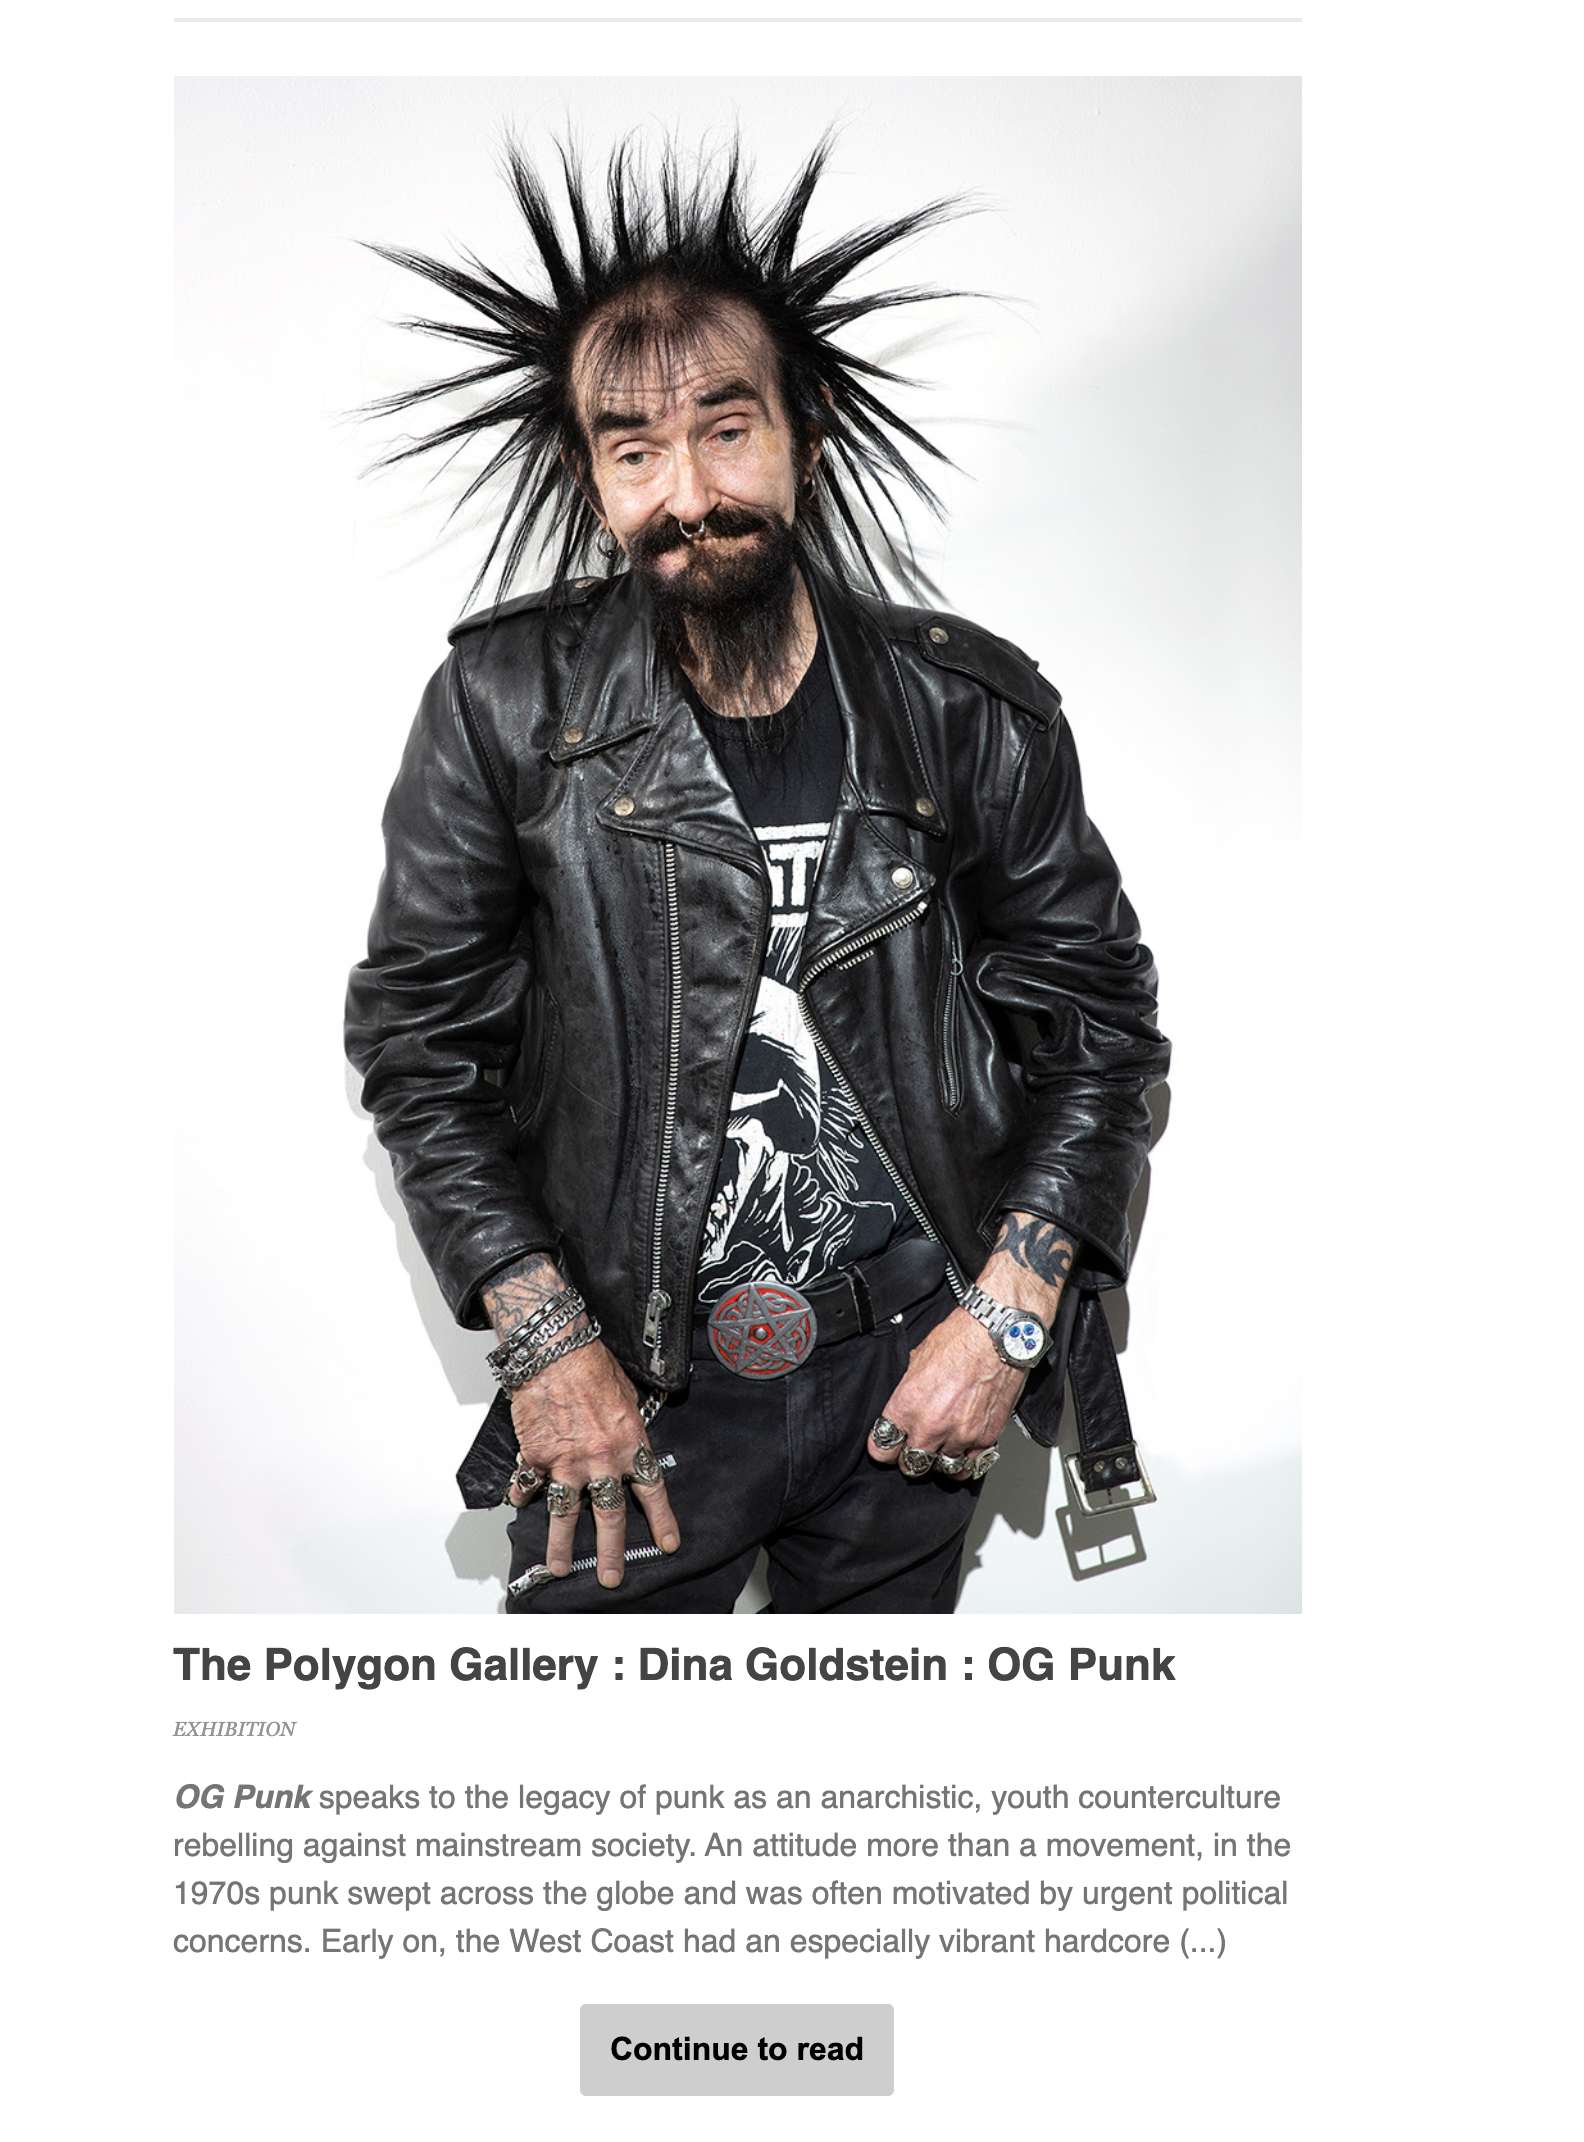 Dina Goldstein OG punk exhibition Vancouver Polygon Gallery article in L'Oeil De La Photographie